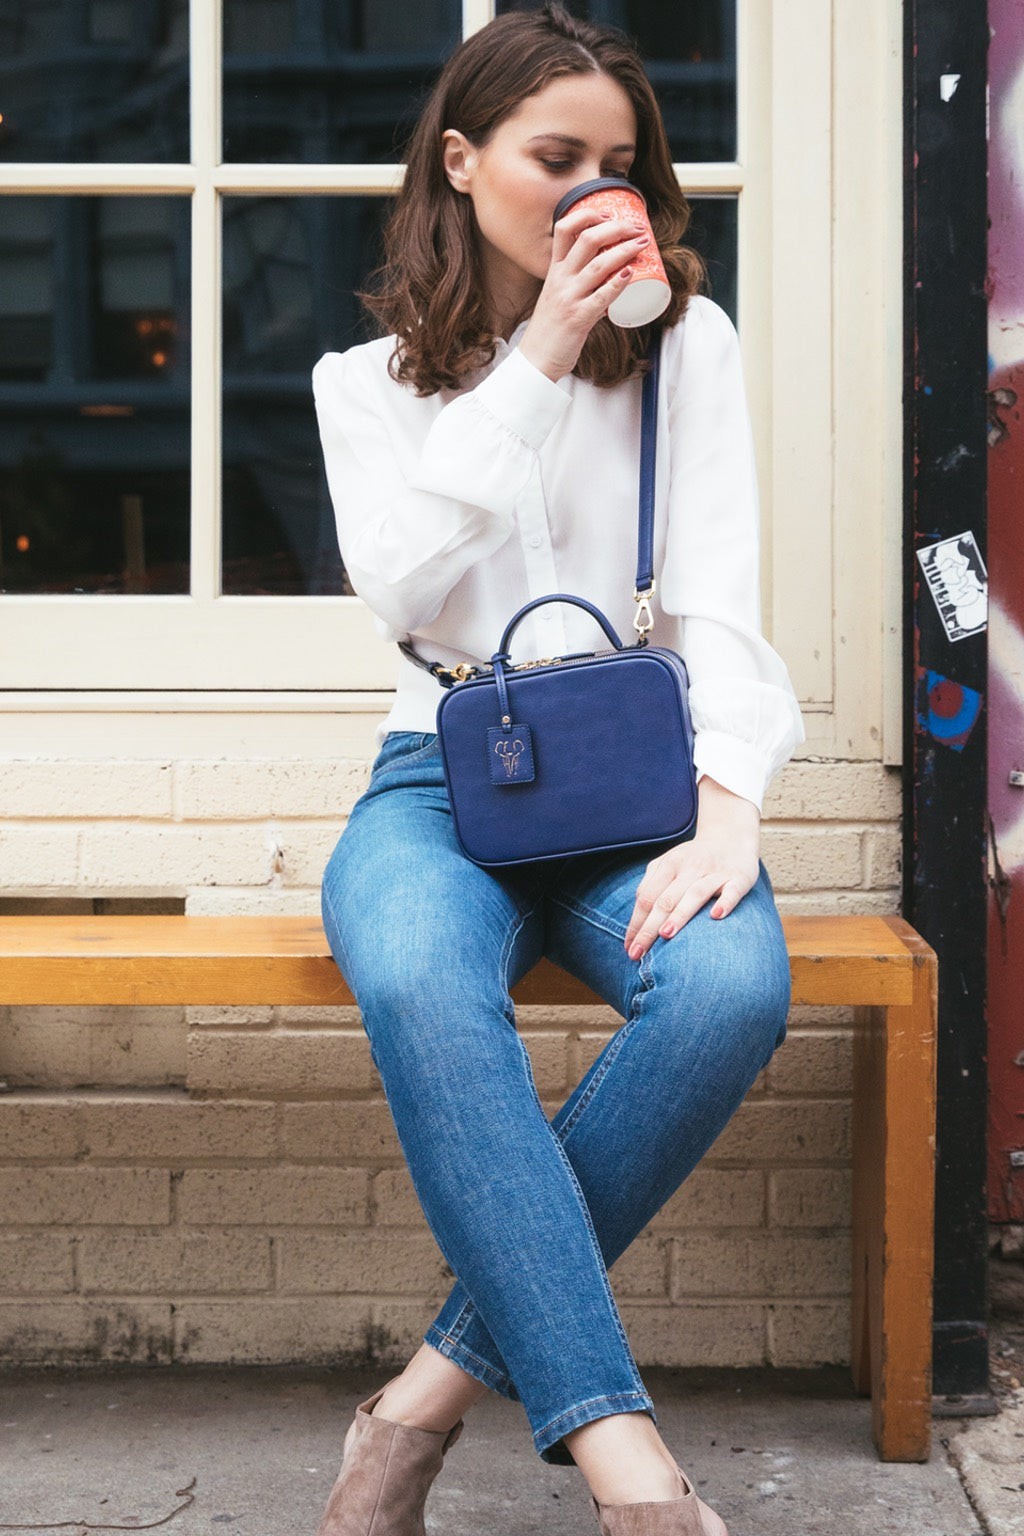 Model wearing FERRON crossbody vegan handbag and drinking coffee